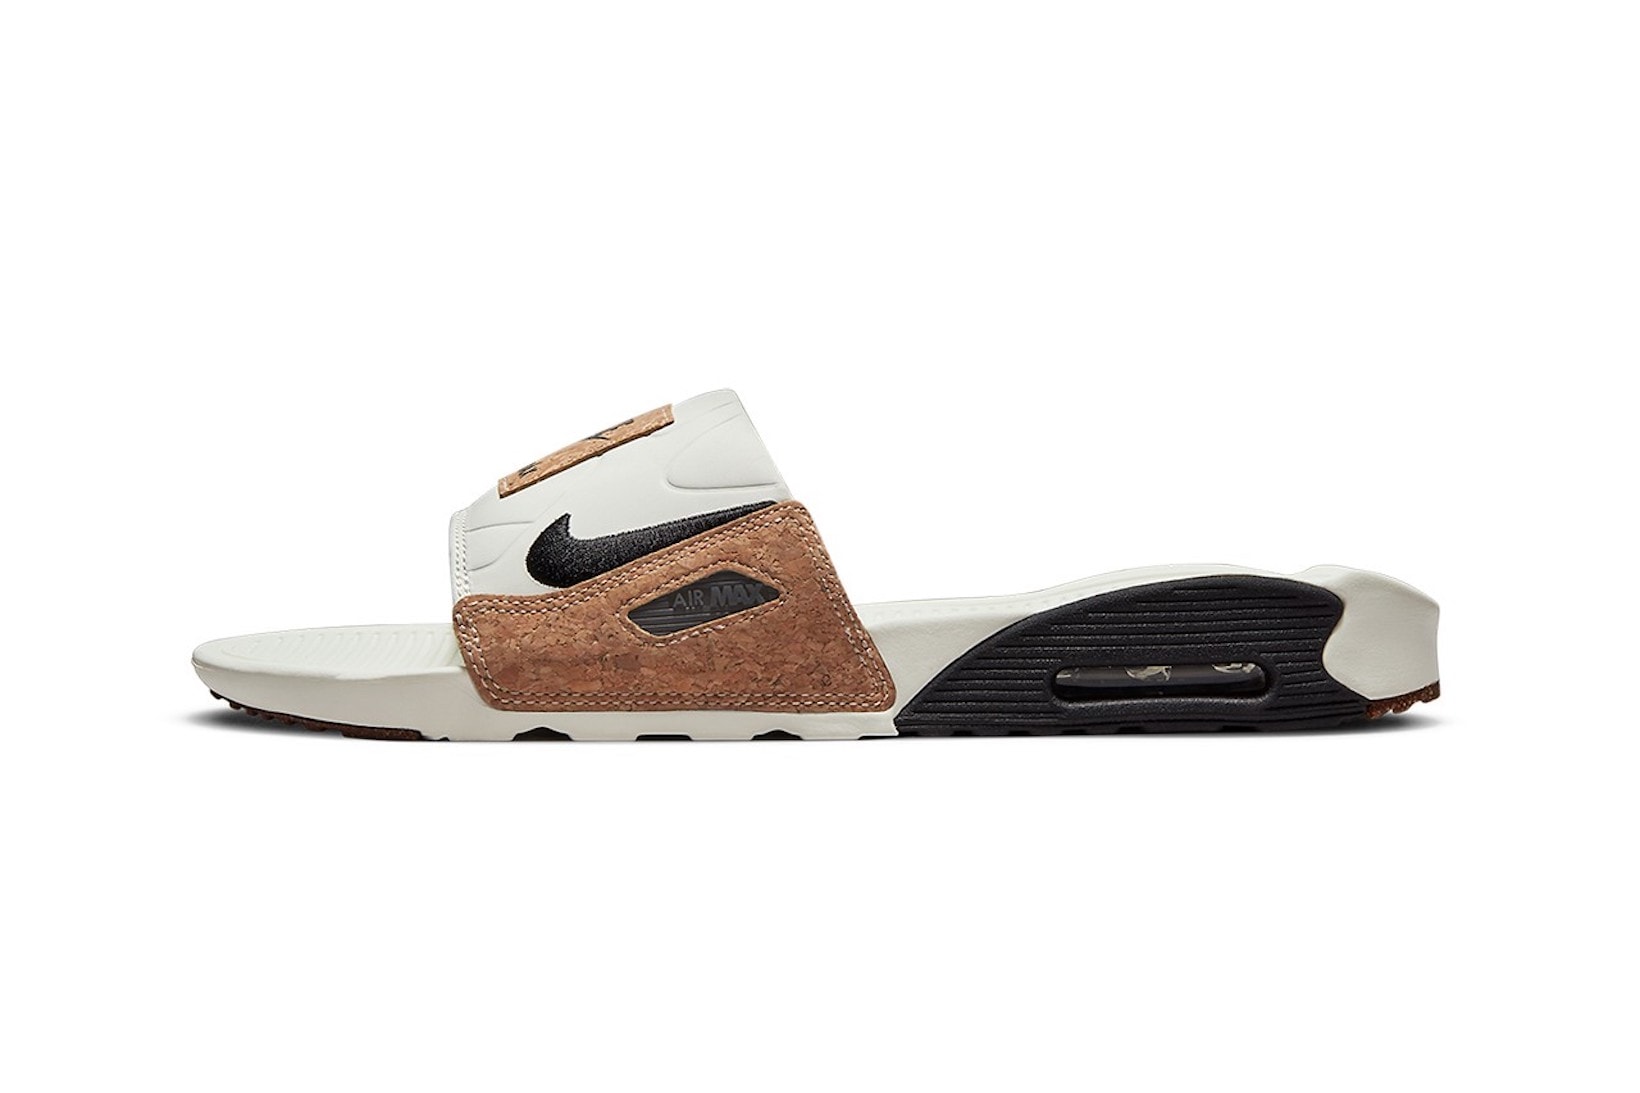 nike air max 90 am90 slide slippers cork beige brown black colorway lateral